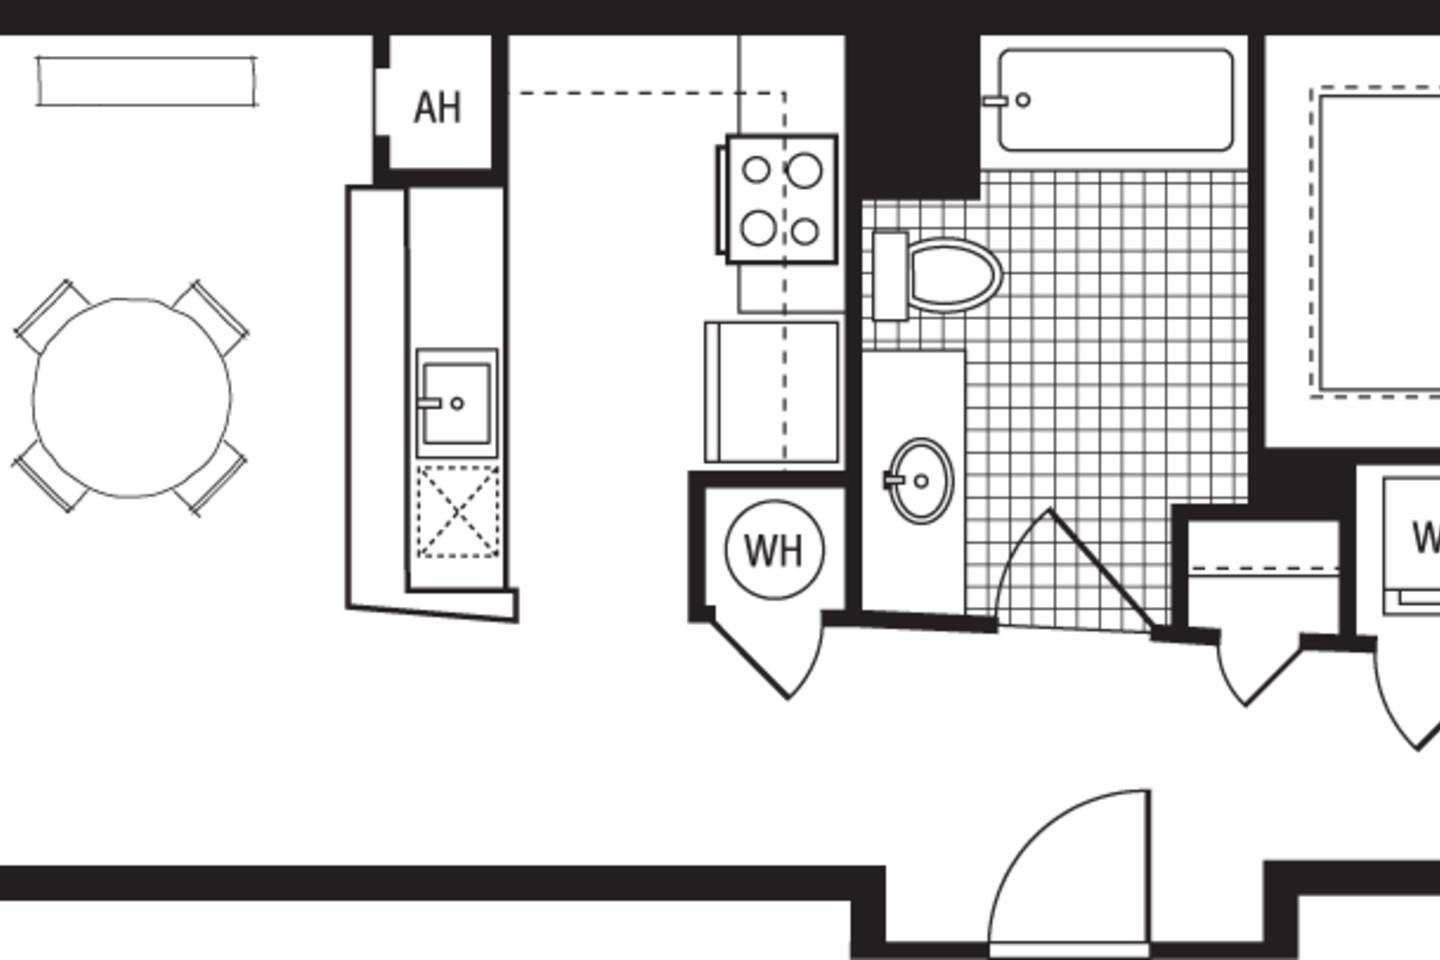 Floorplan diagram for 1VX, showing Studio